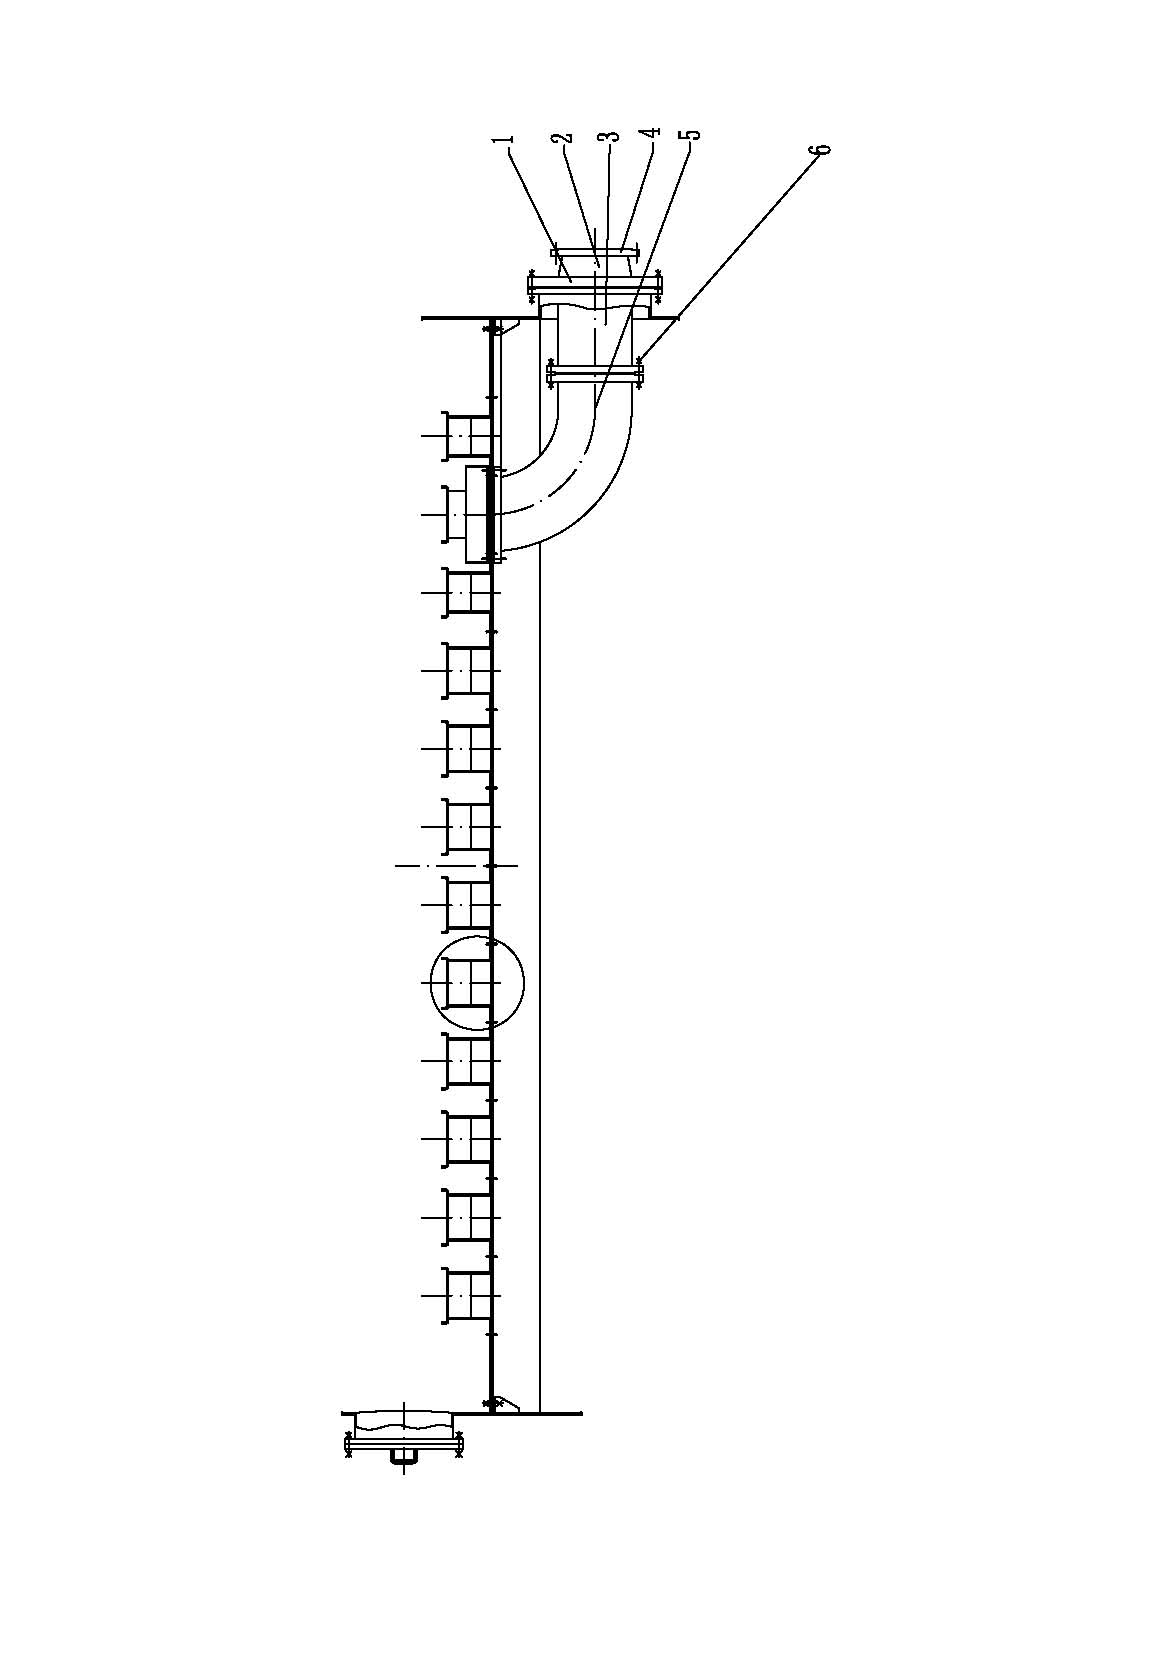 Double-tower ammonia-method desulfurization process